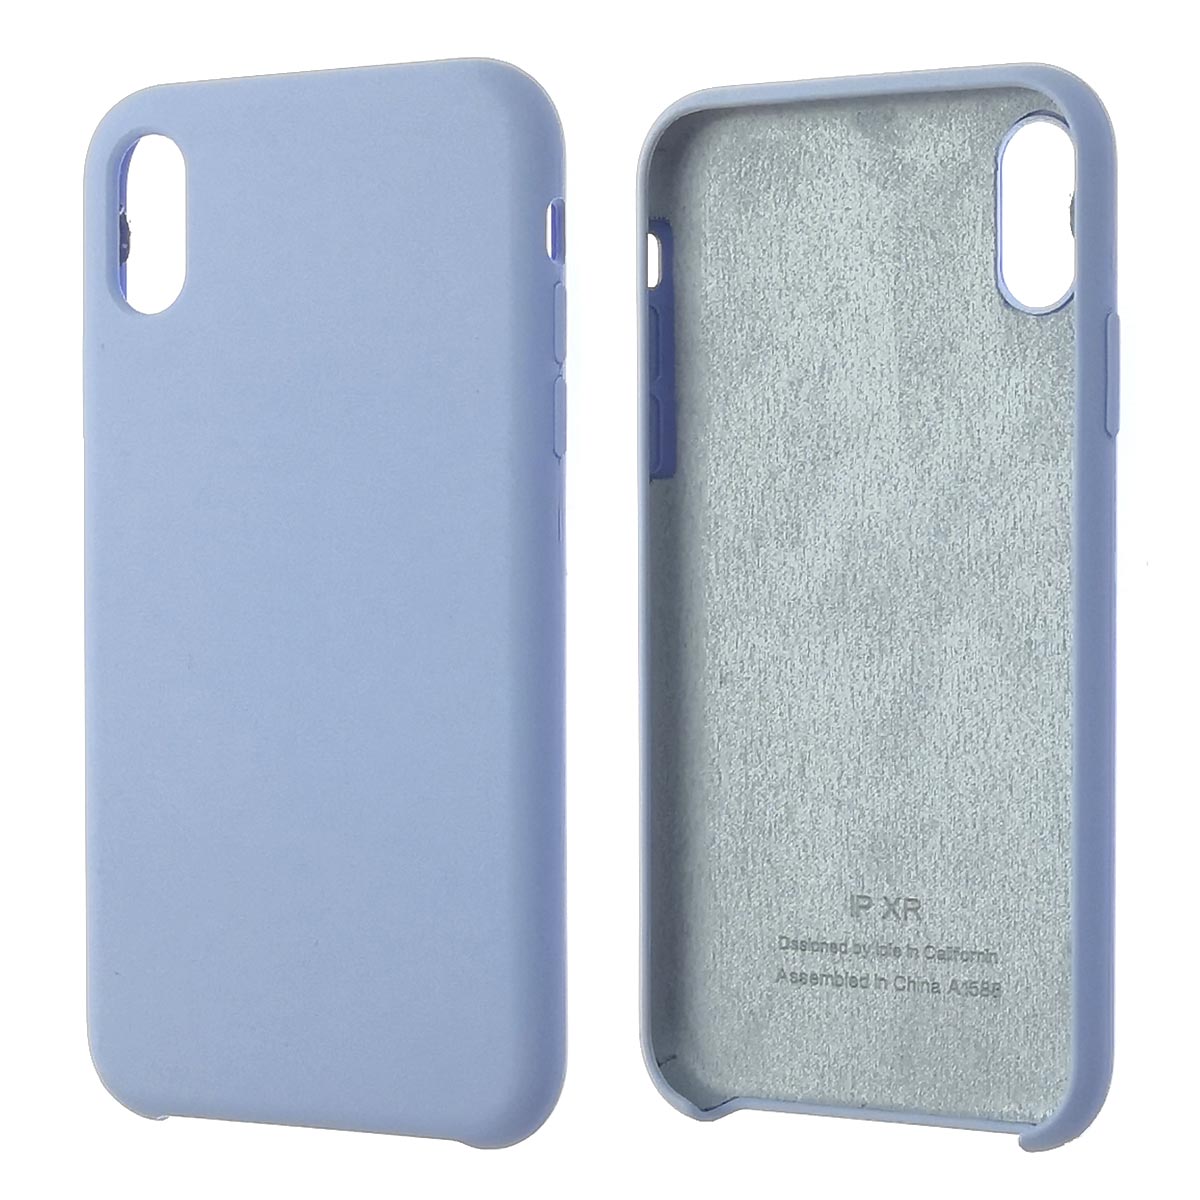 Чехол накладка Silicon Case для APPLE iPhone XR, силикон, бархат, цвет бледно сиреневый